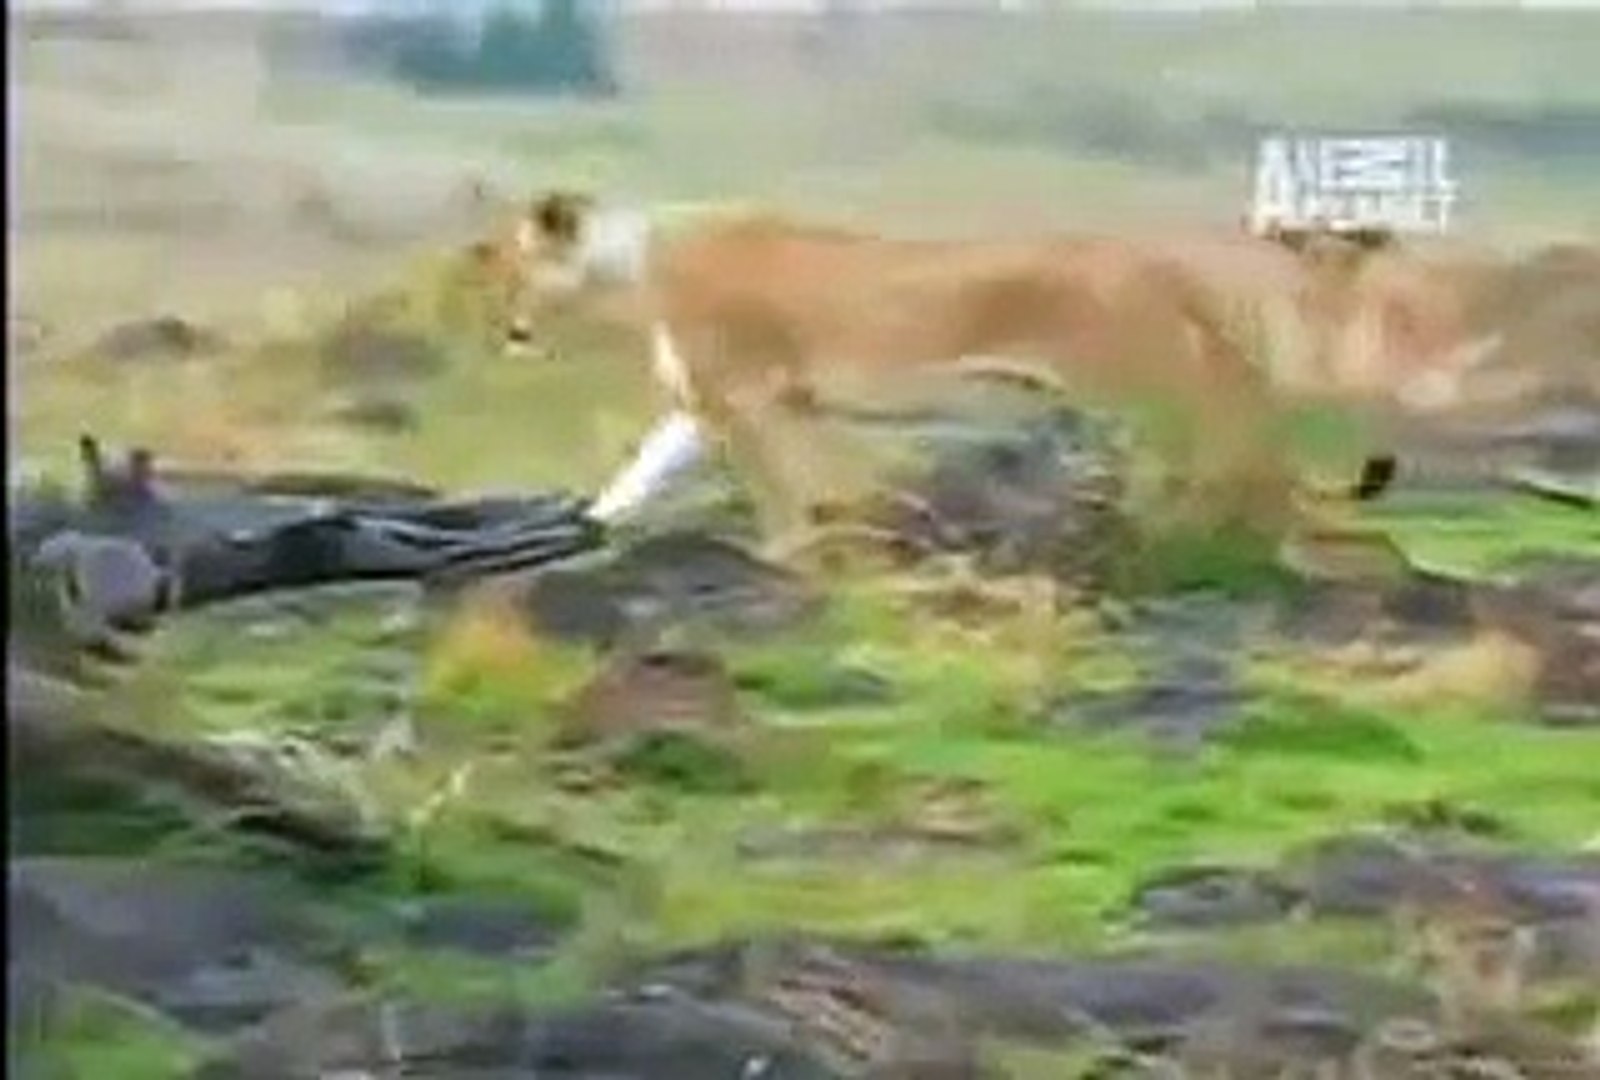 Lion vs Buffalo fight - Buffalo surviving